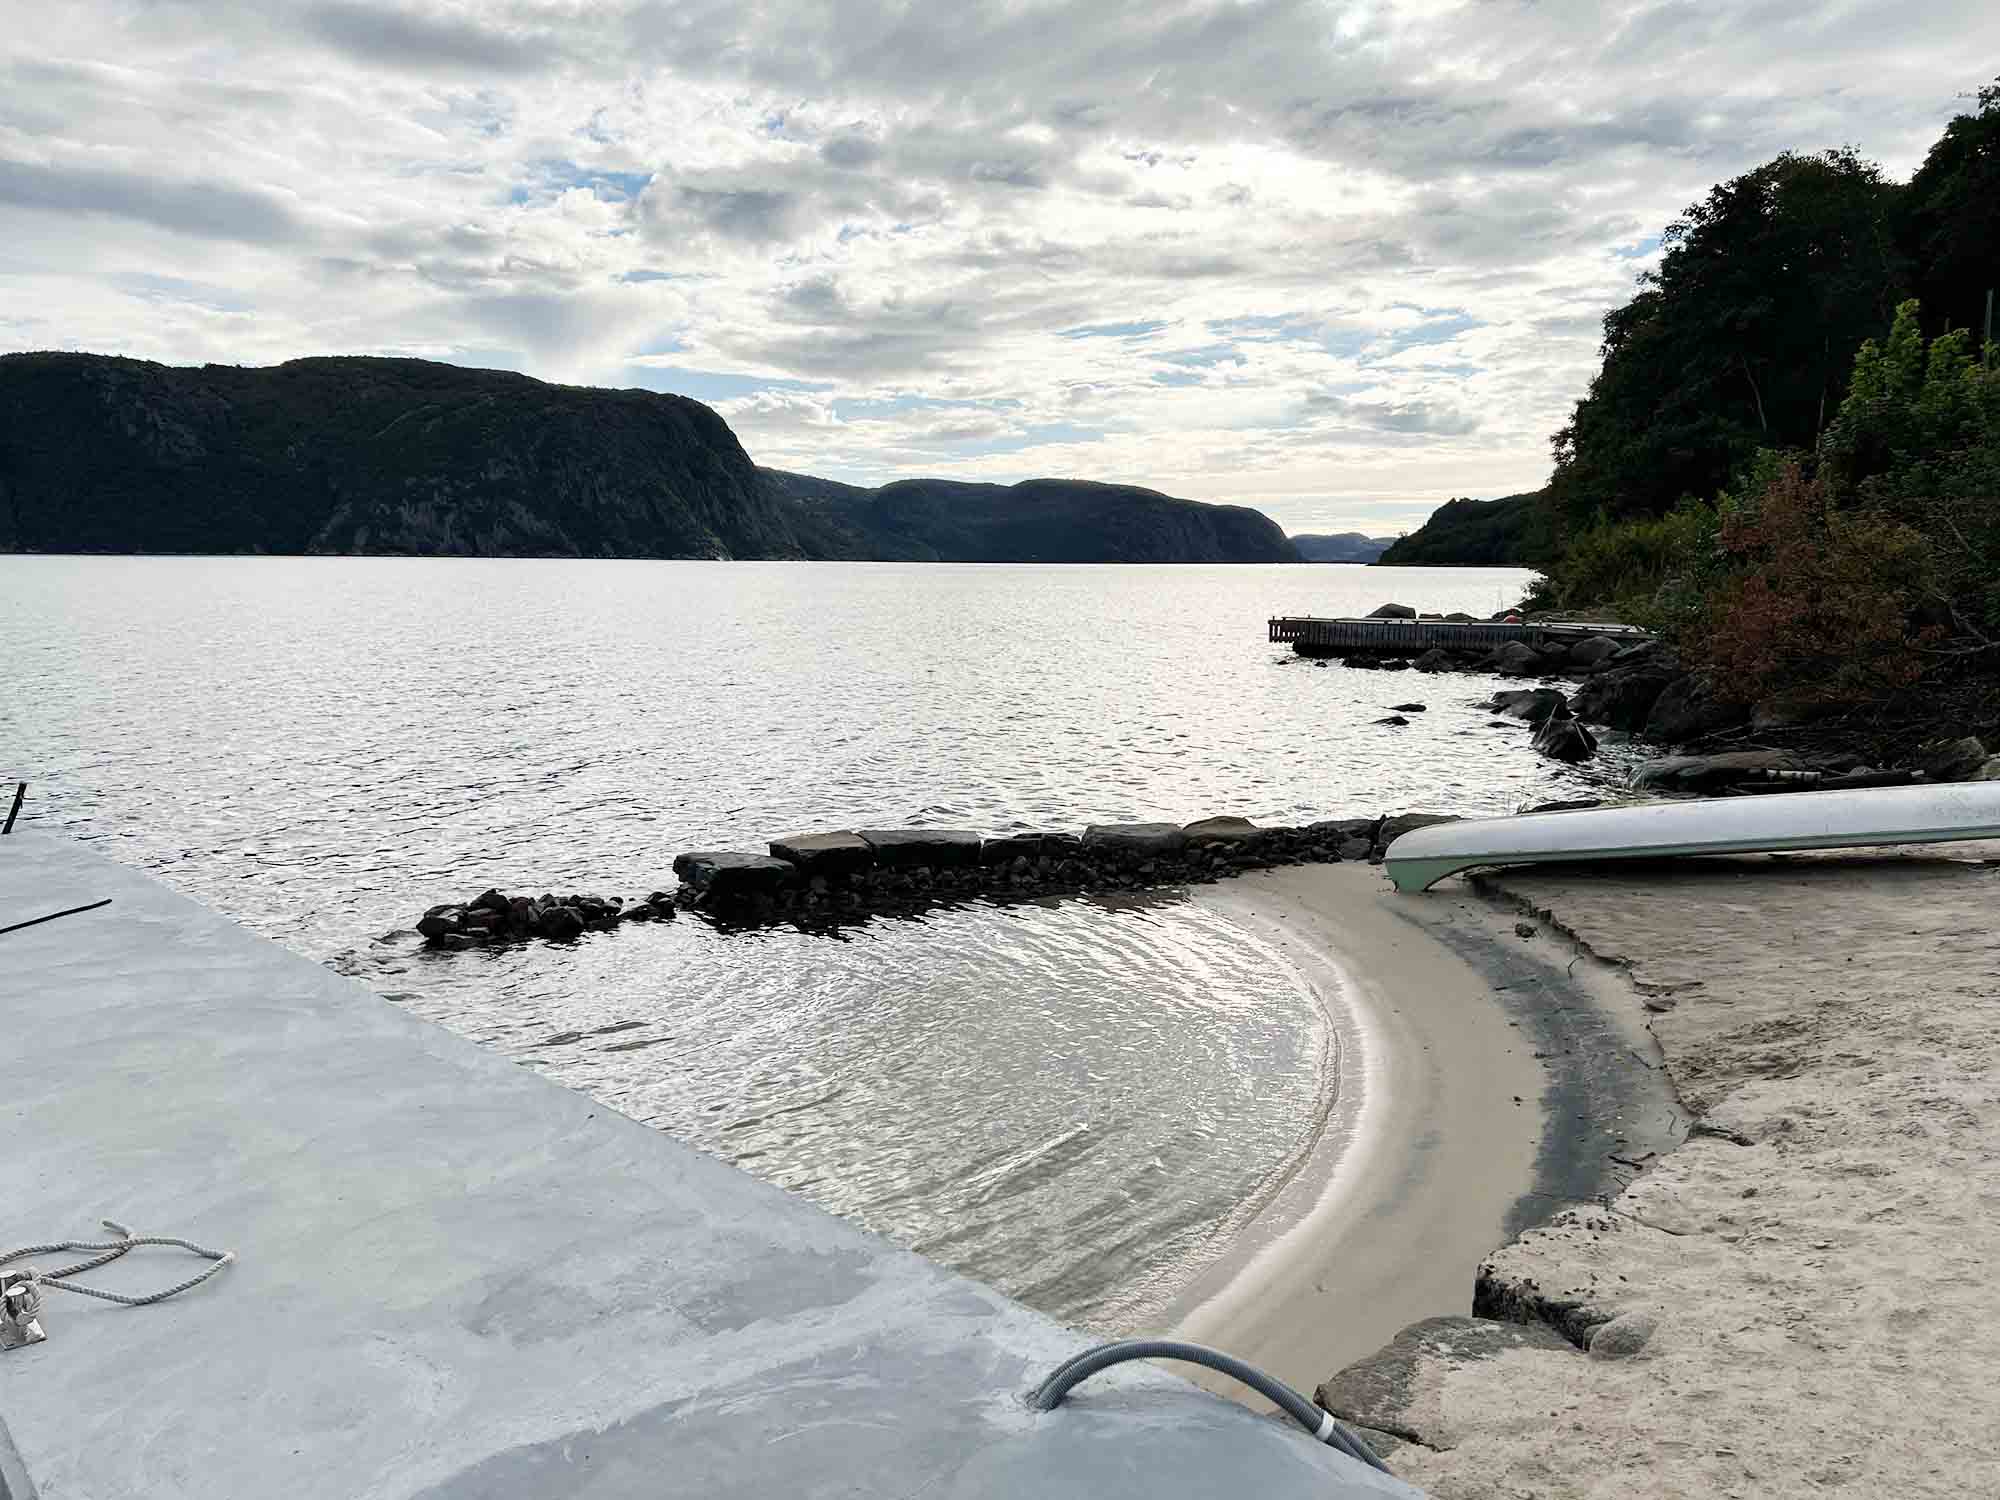 Norway: Gone fishing in Farsund